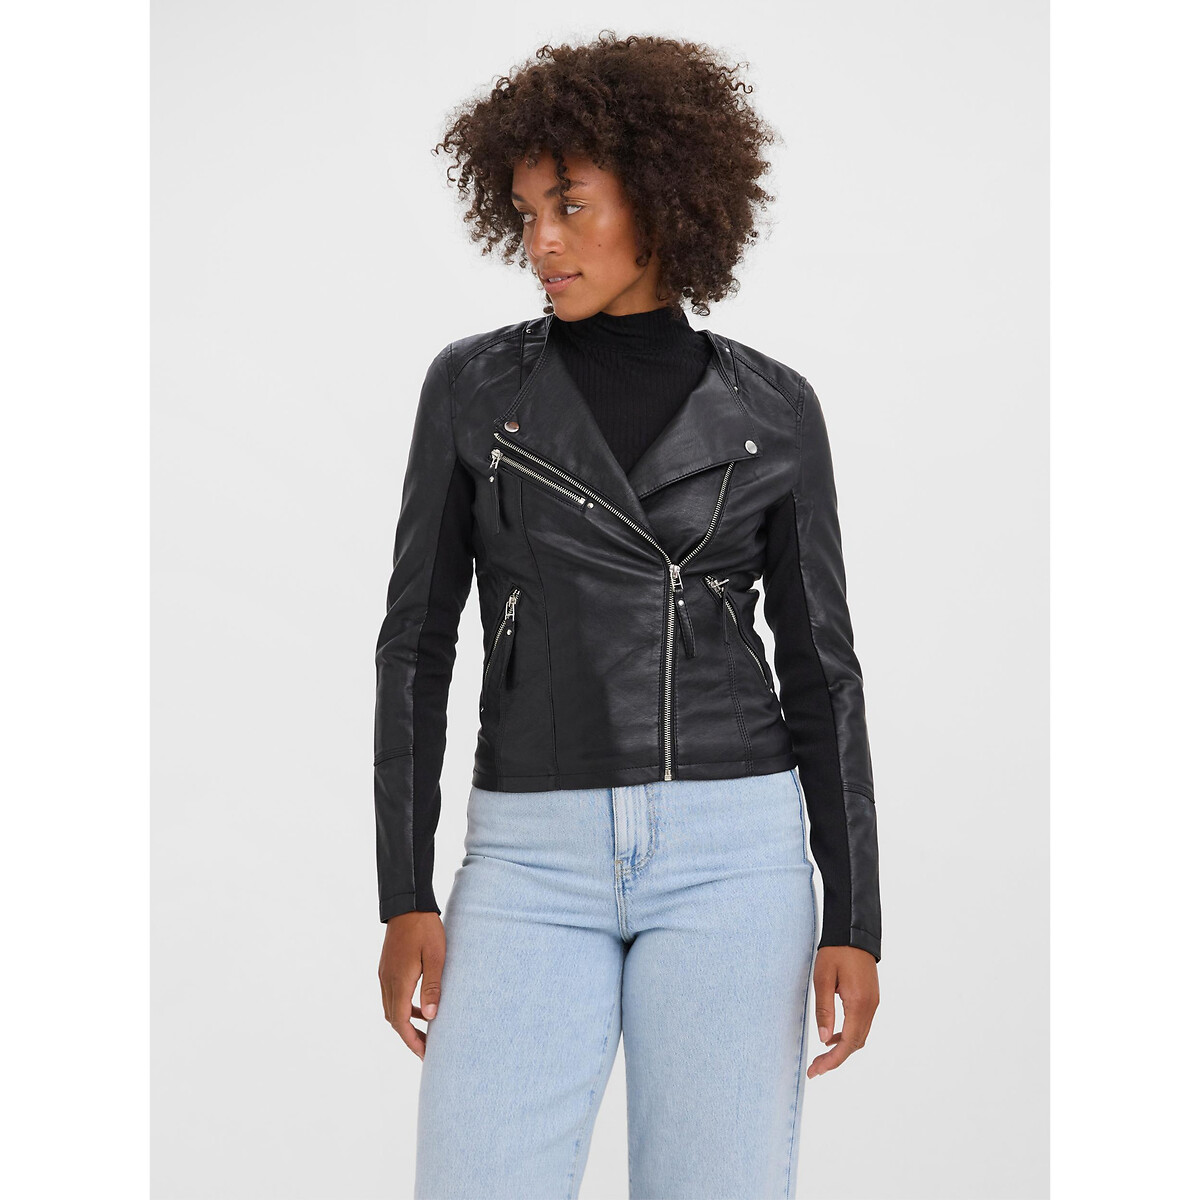 leather jacket black Vero Moda | La Redoute